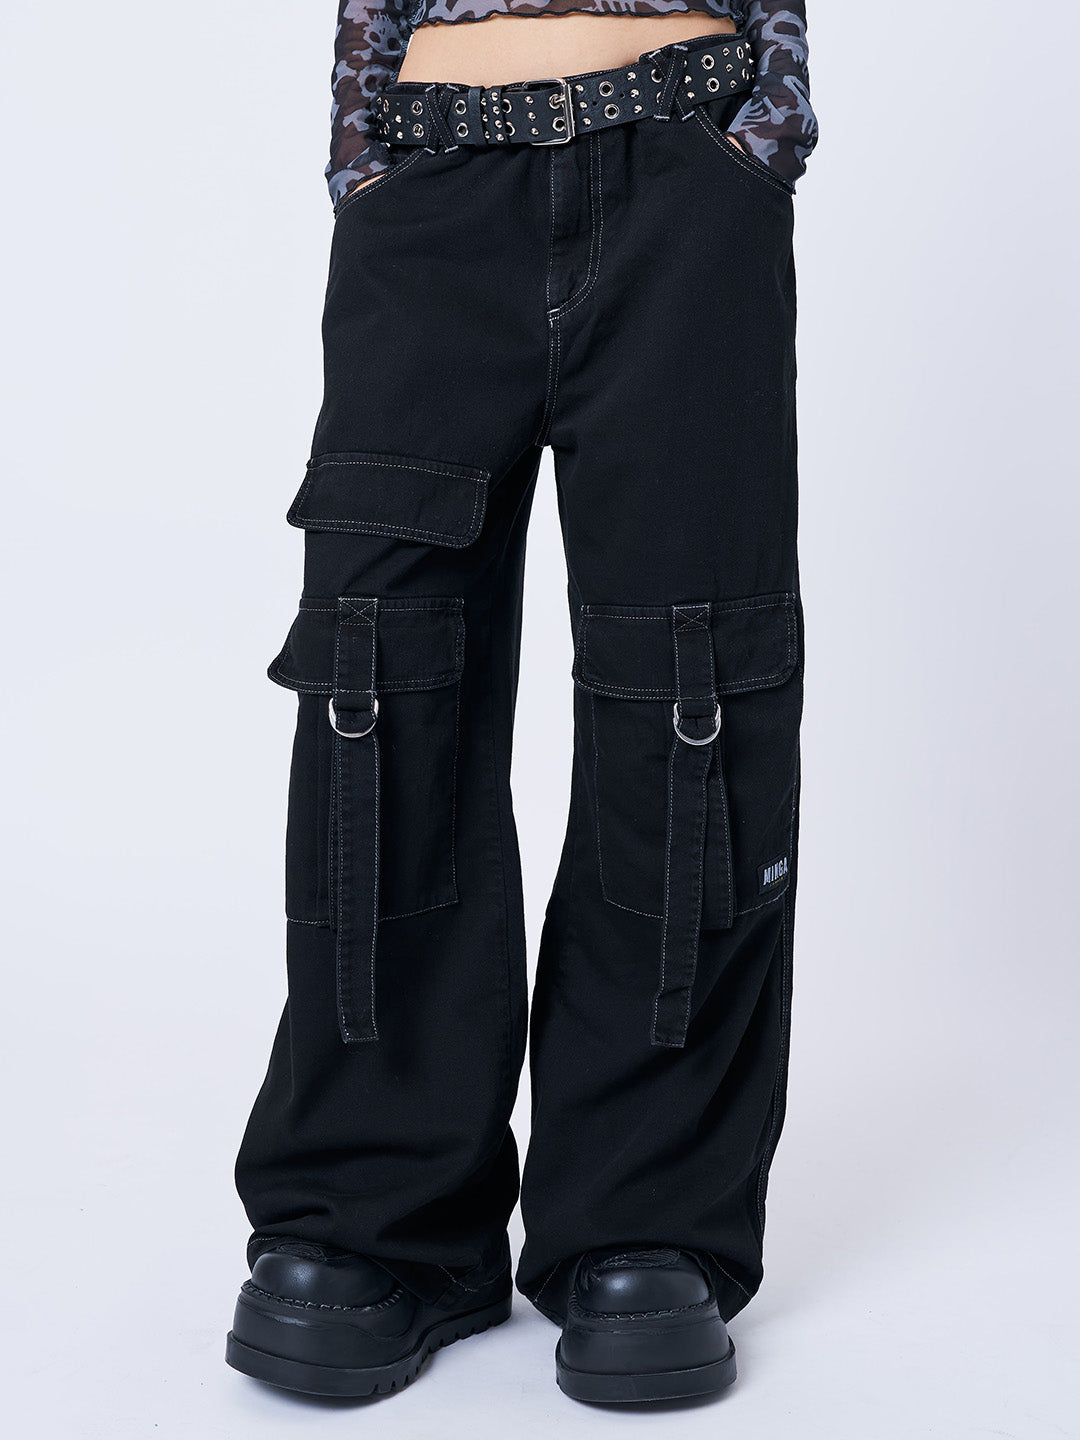 Tyra Black Utility Pockets Pants